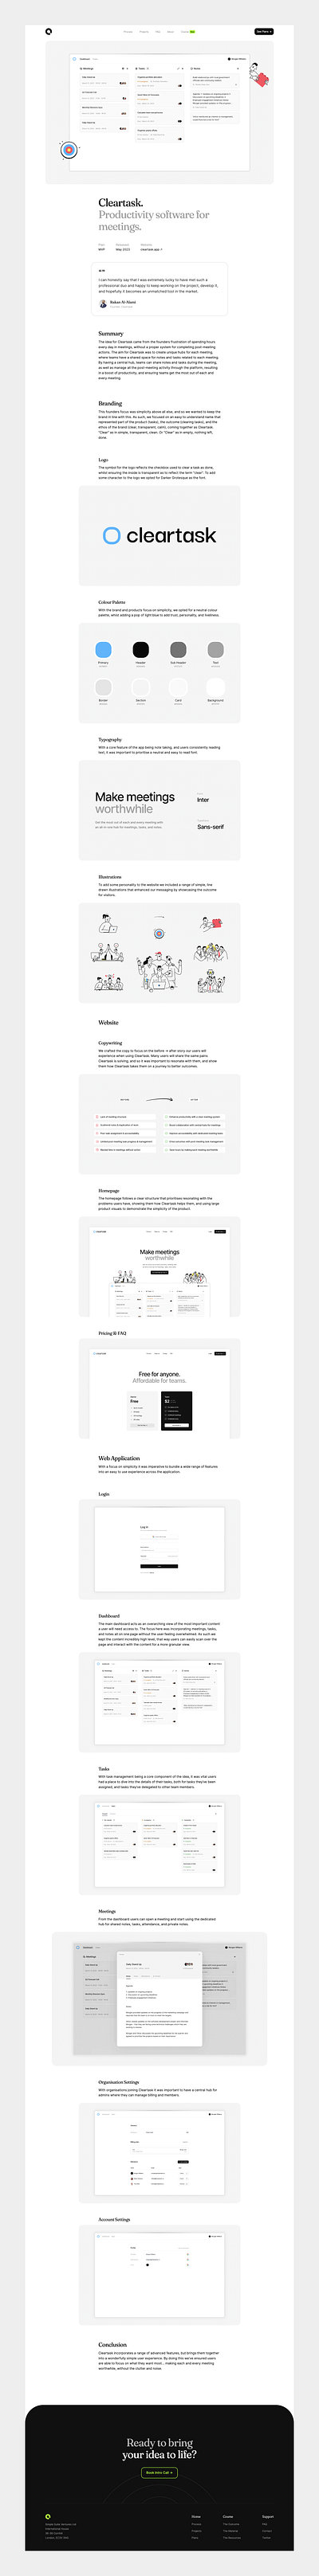 Simple Suite Projects Page design project showcase ui web app